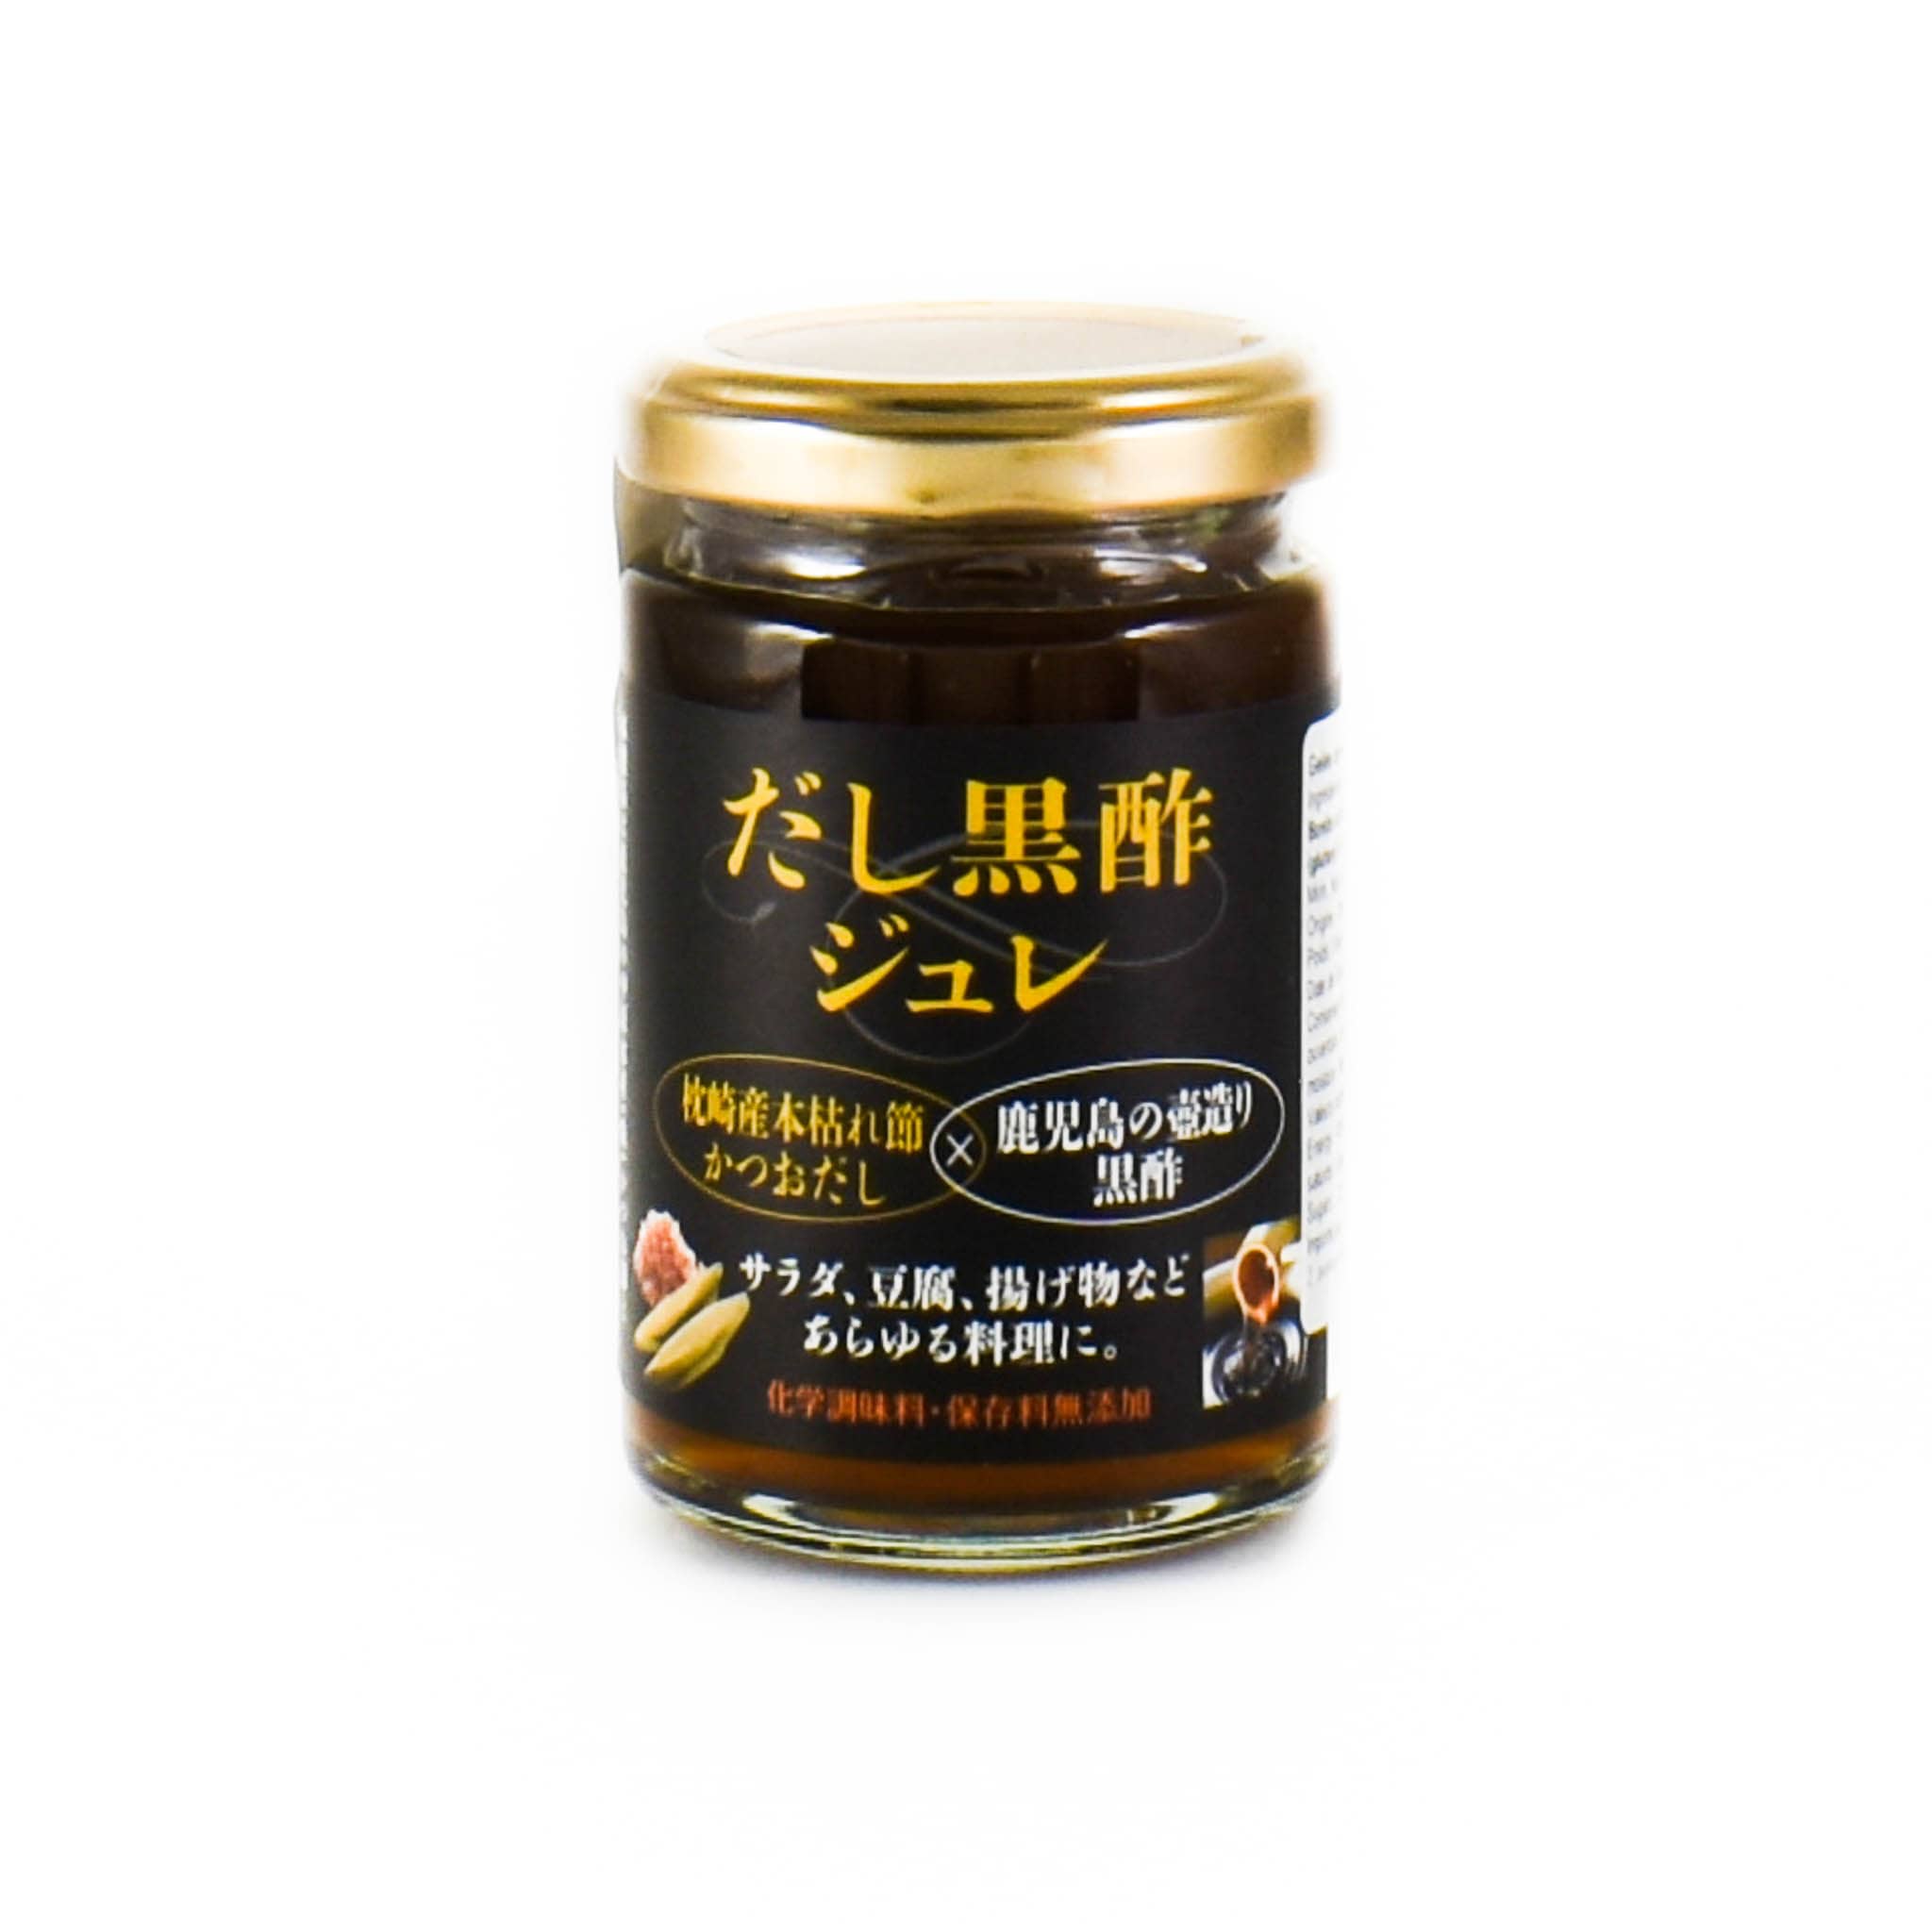 Black Vinegar Jelly With Dashi 140g